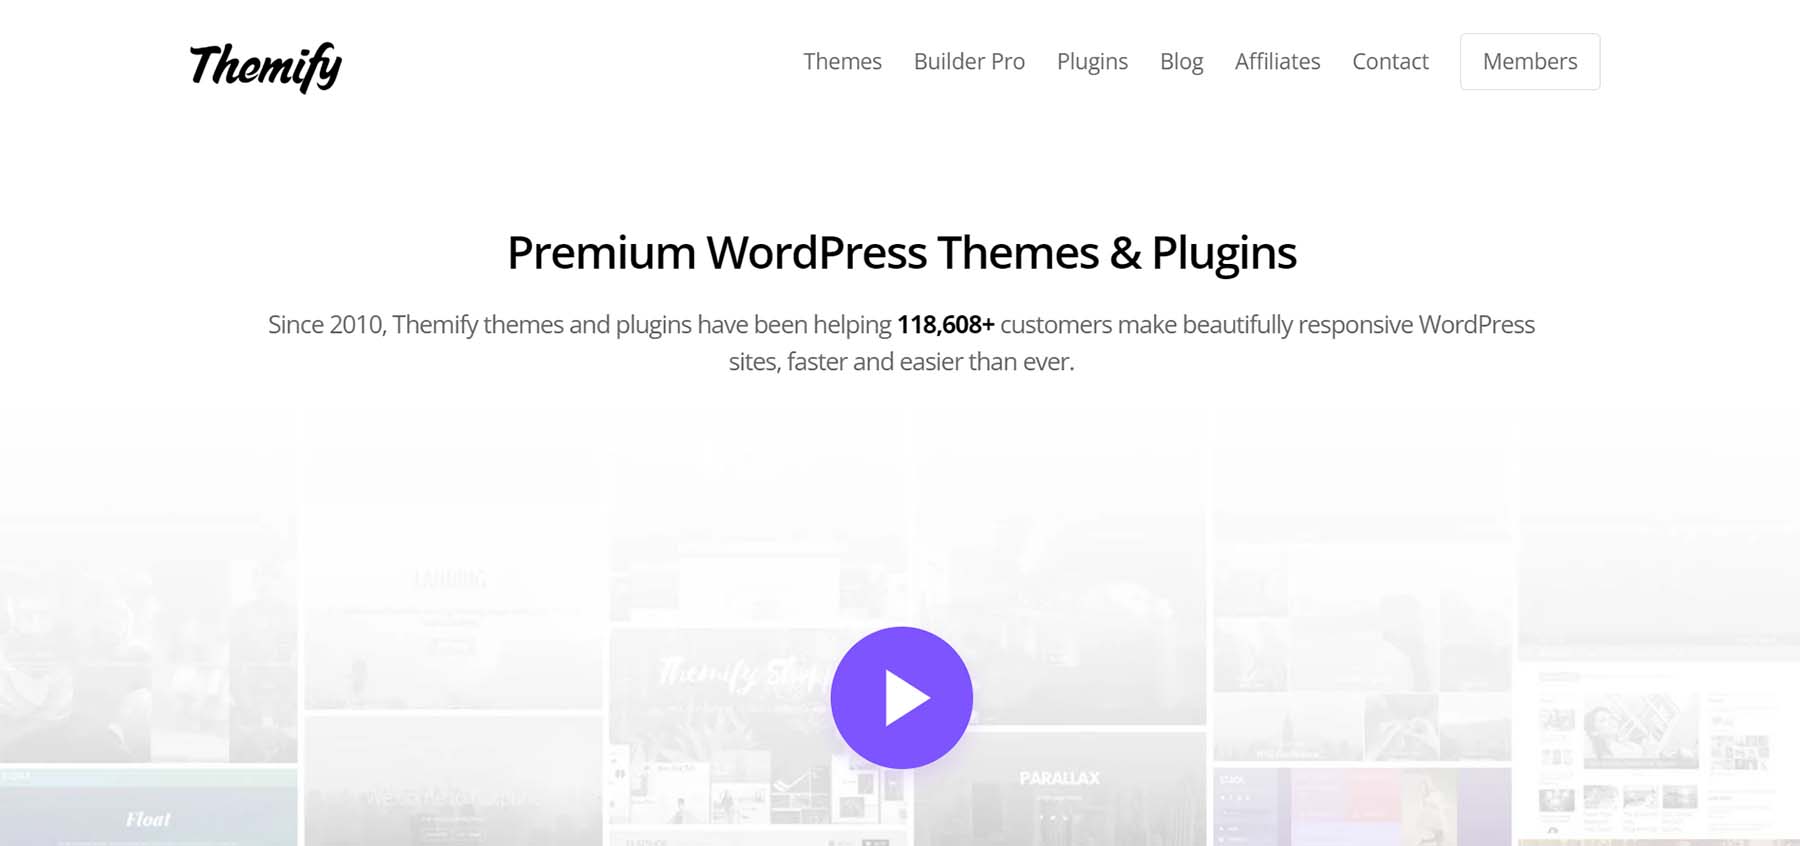 Thème et plugins WordPress Themify Premium